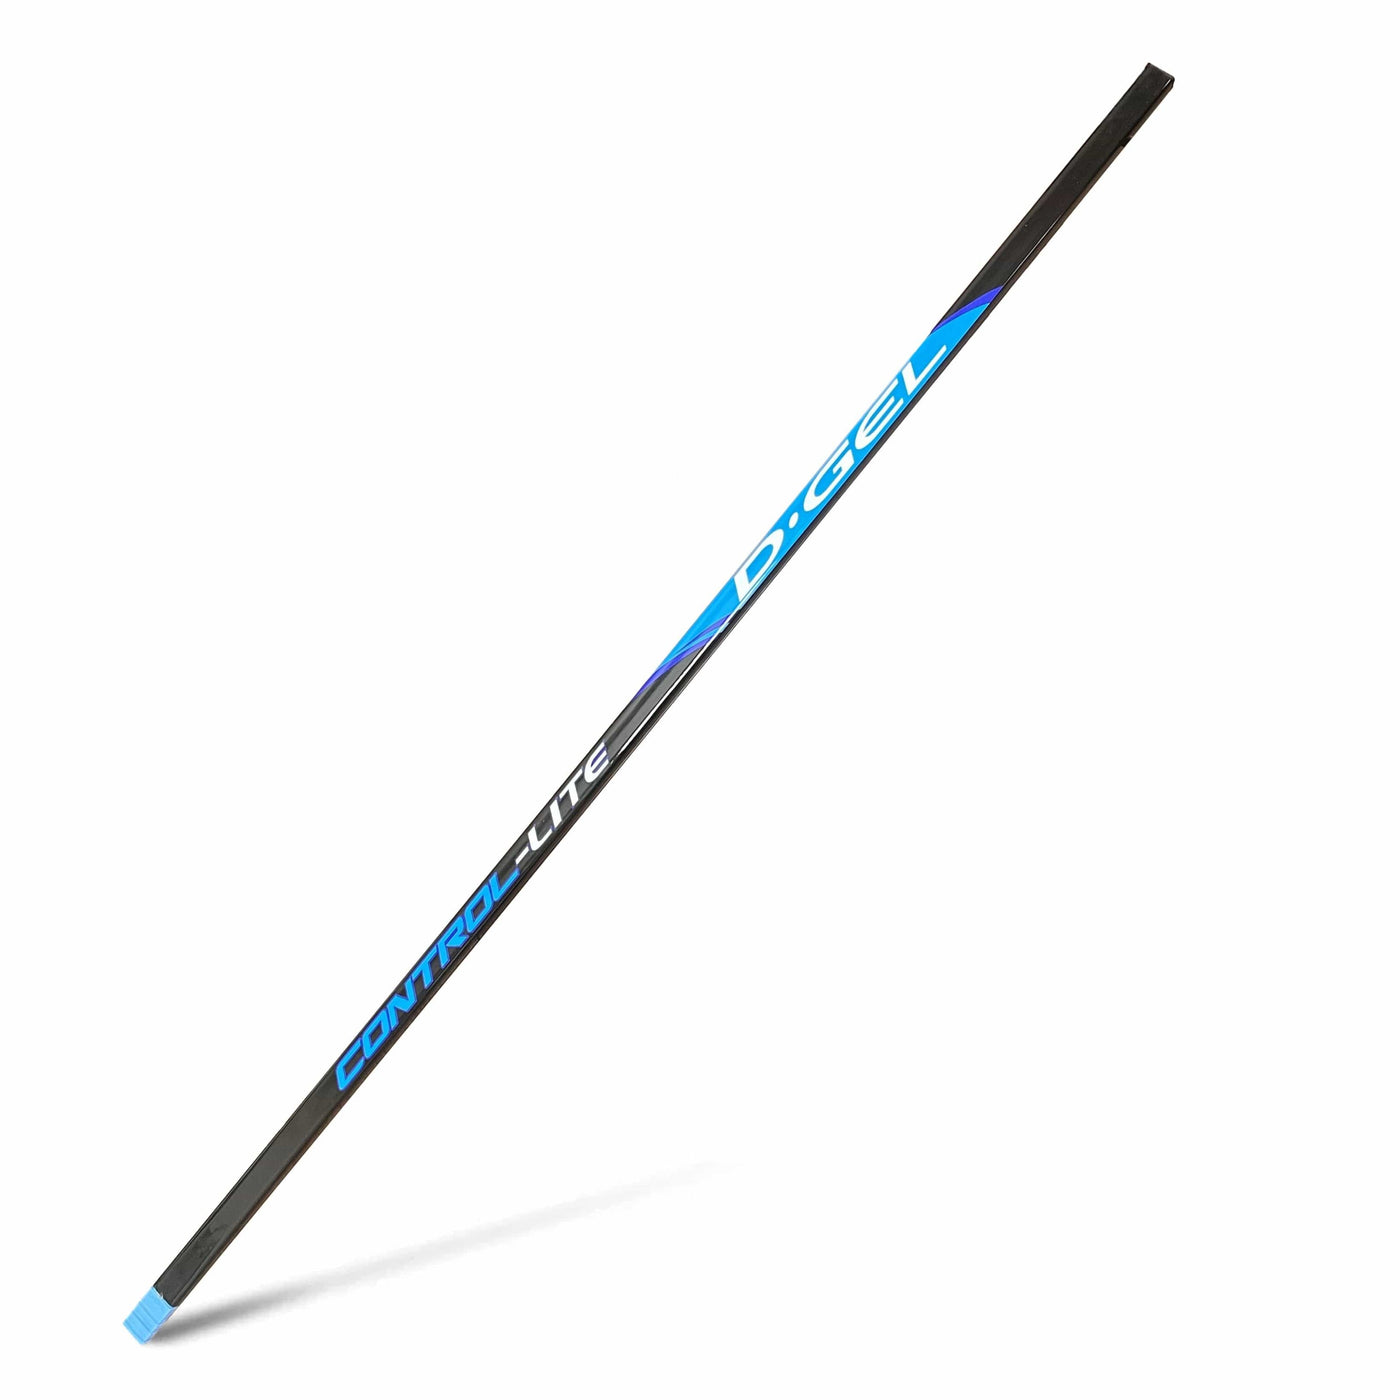 D-Gel Control-Lite Senior Composite Ringette Stick - The Hockey Shop Source For Sports